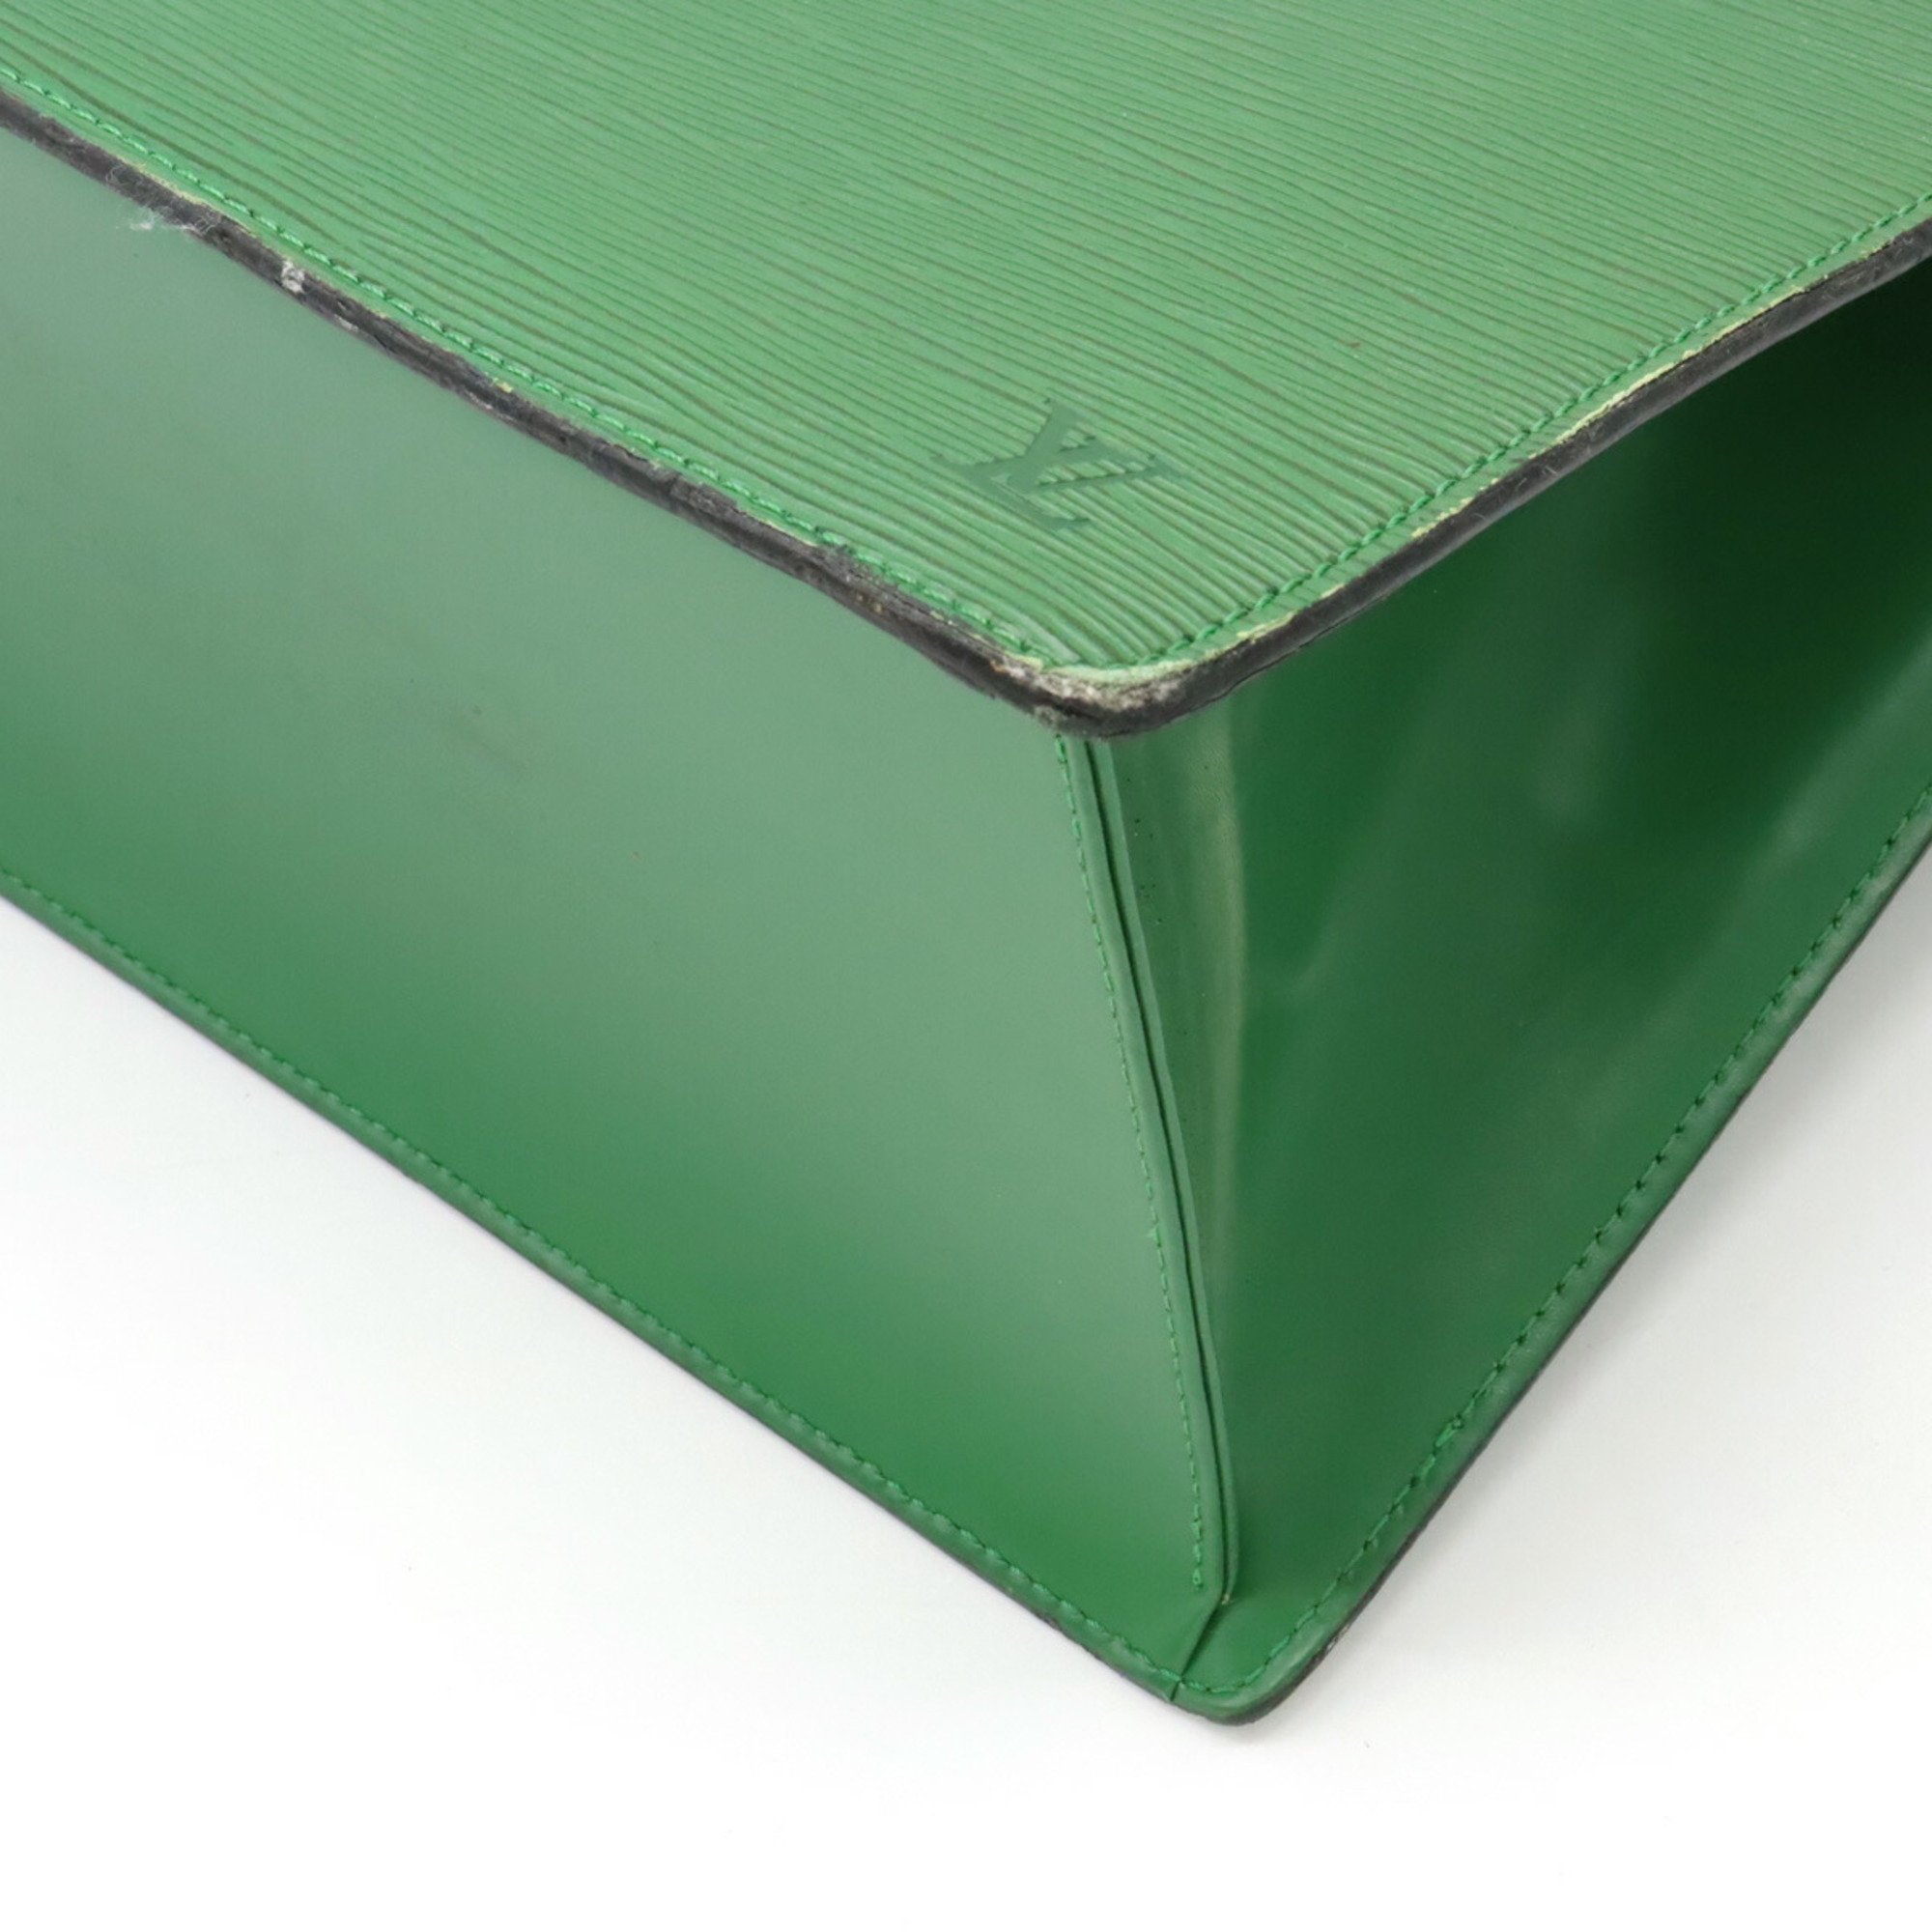 LOUIS VUITTON Epi Riviera Handbag Leather Borneo Green M48184